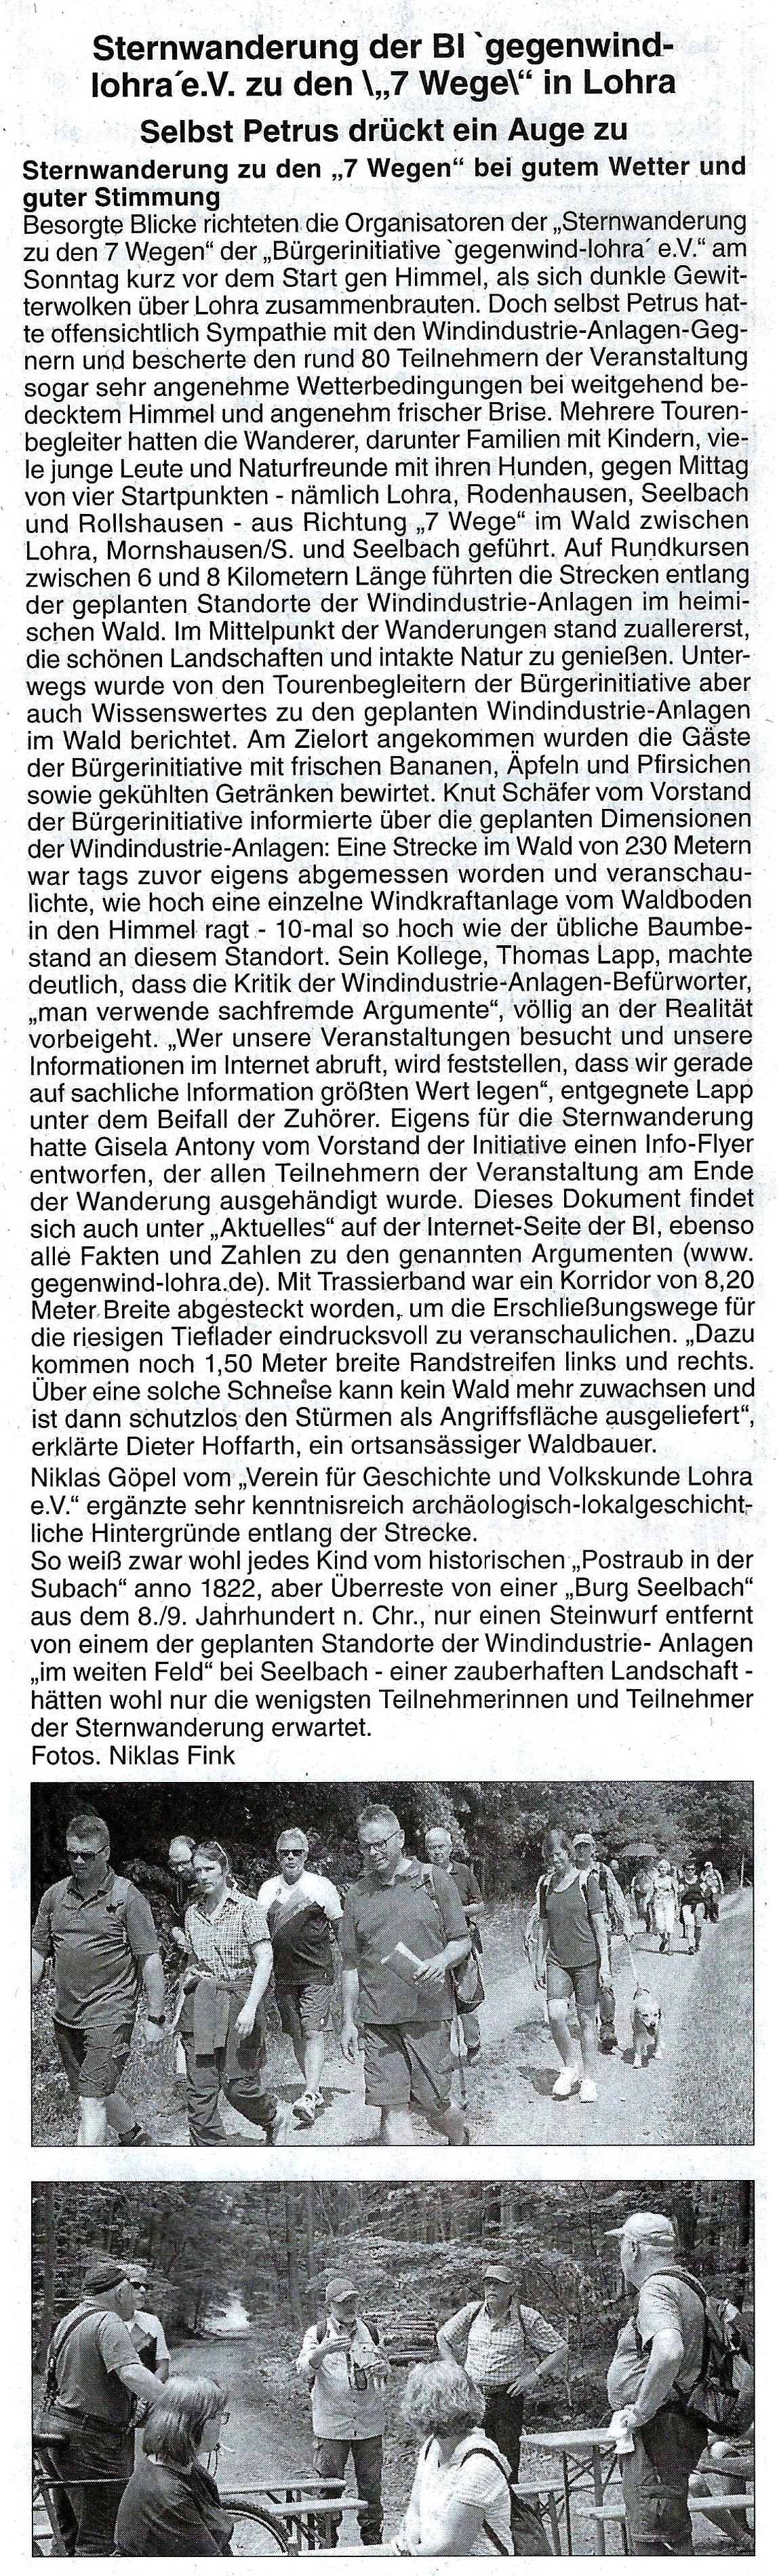 Amtsblatt Lohra Sternwanderung 21.06.2018